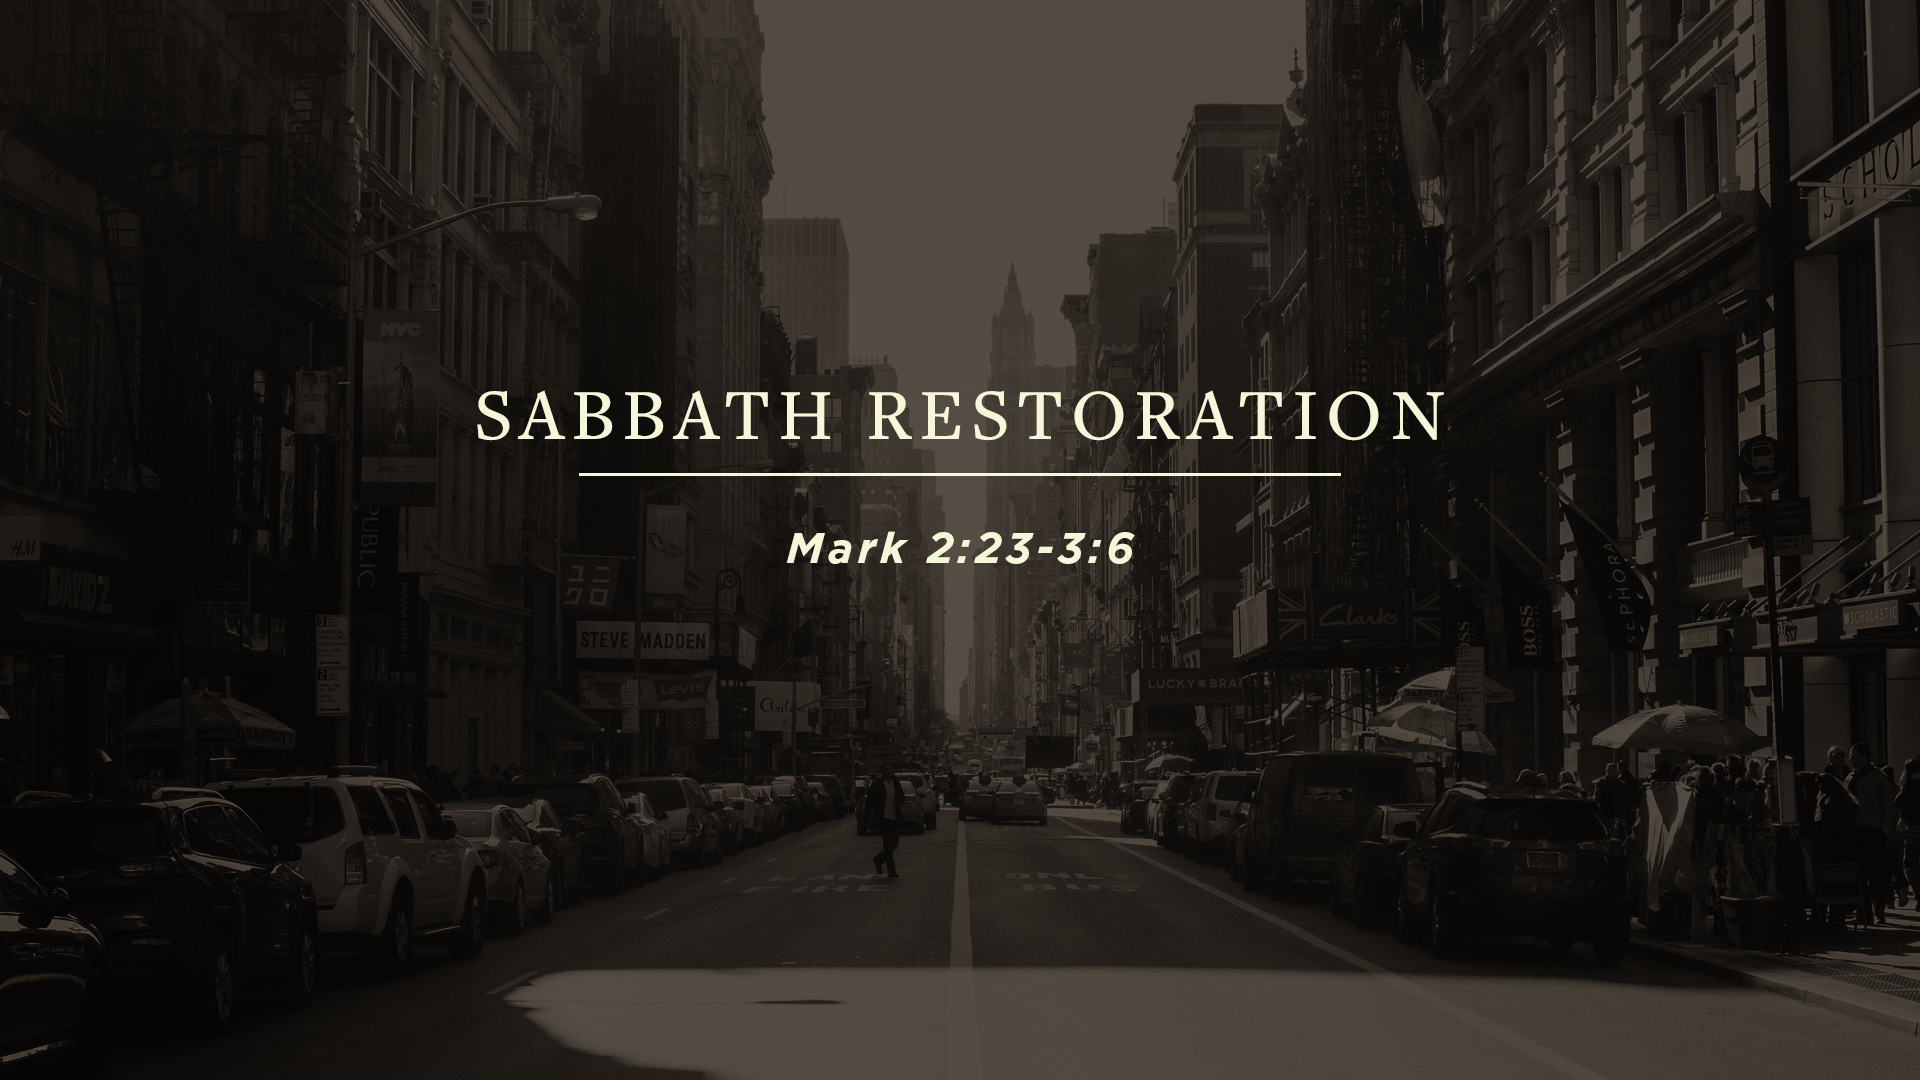 Sabbath Restoration